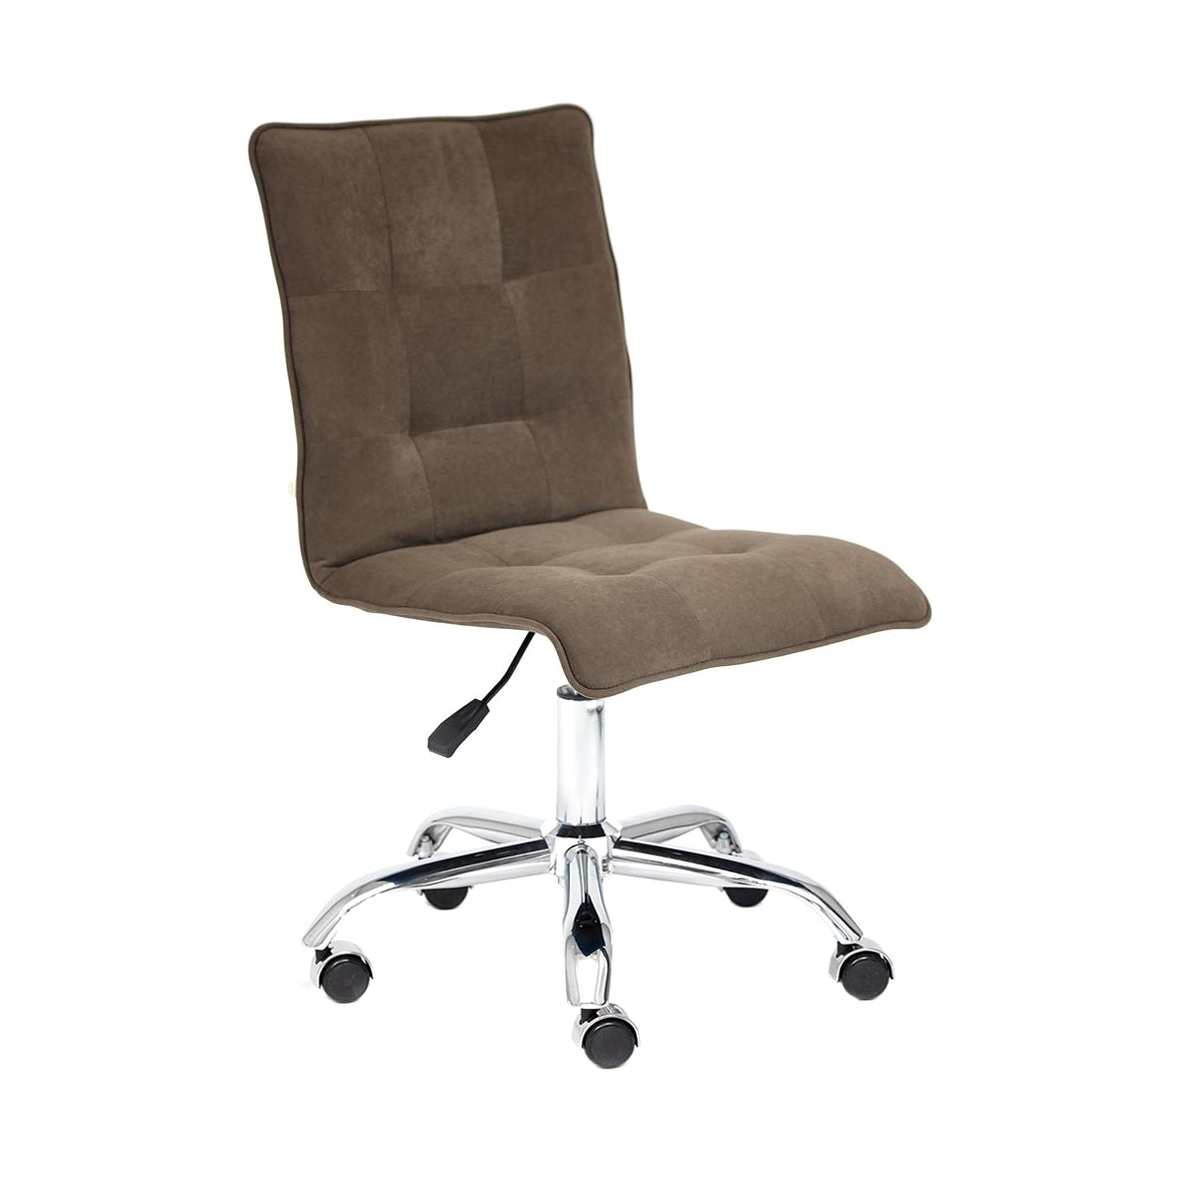 Кресло офисное TC до 100 кг 96х45х40 см коричневый кресло компьютерное tc темно коричневый 130х61х48 см